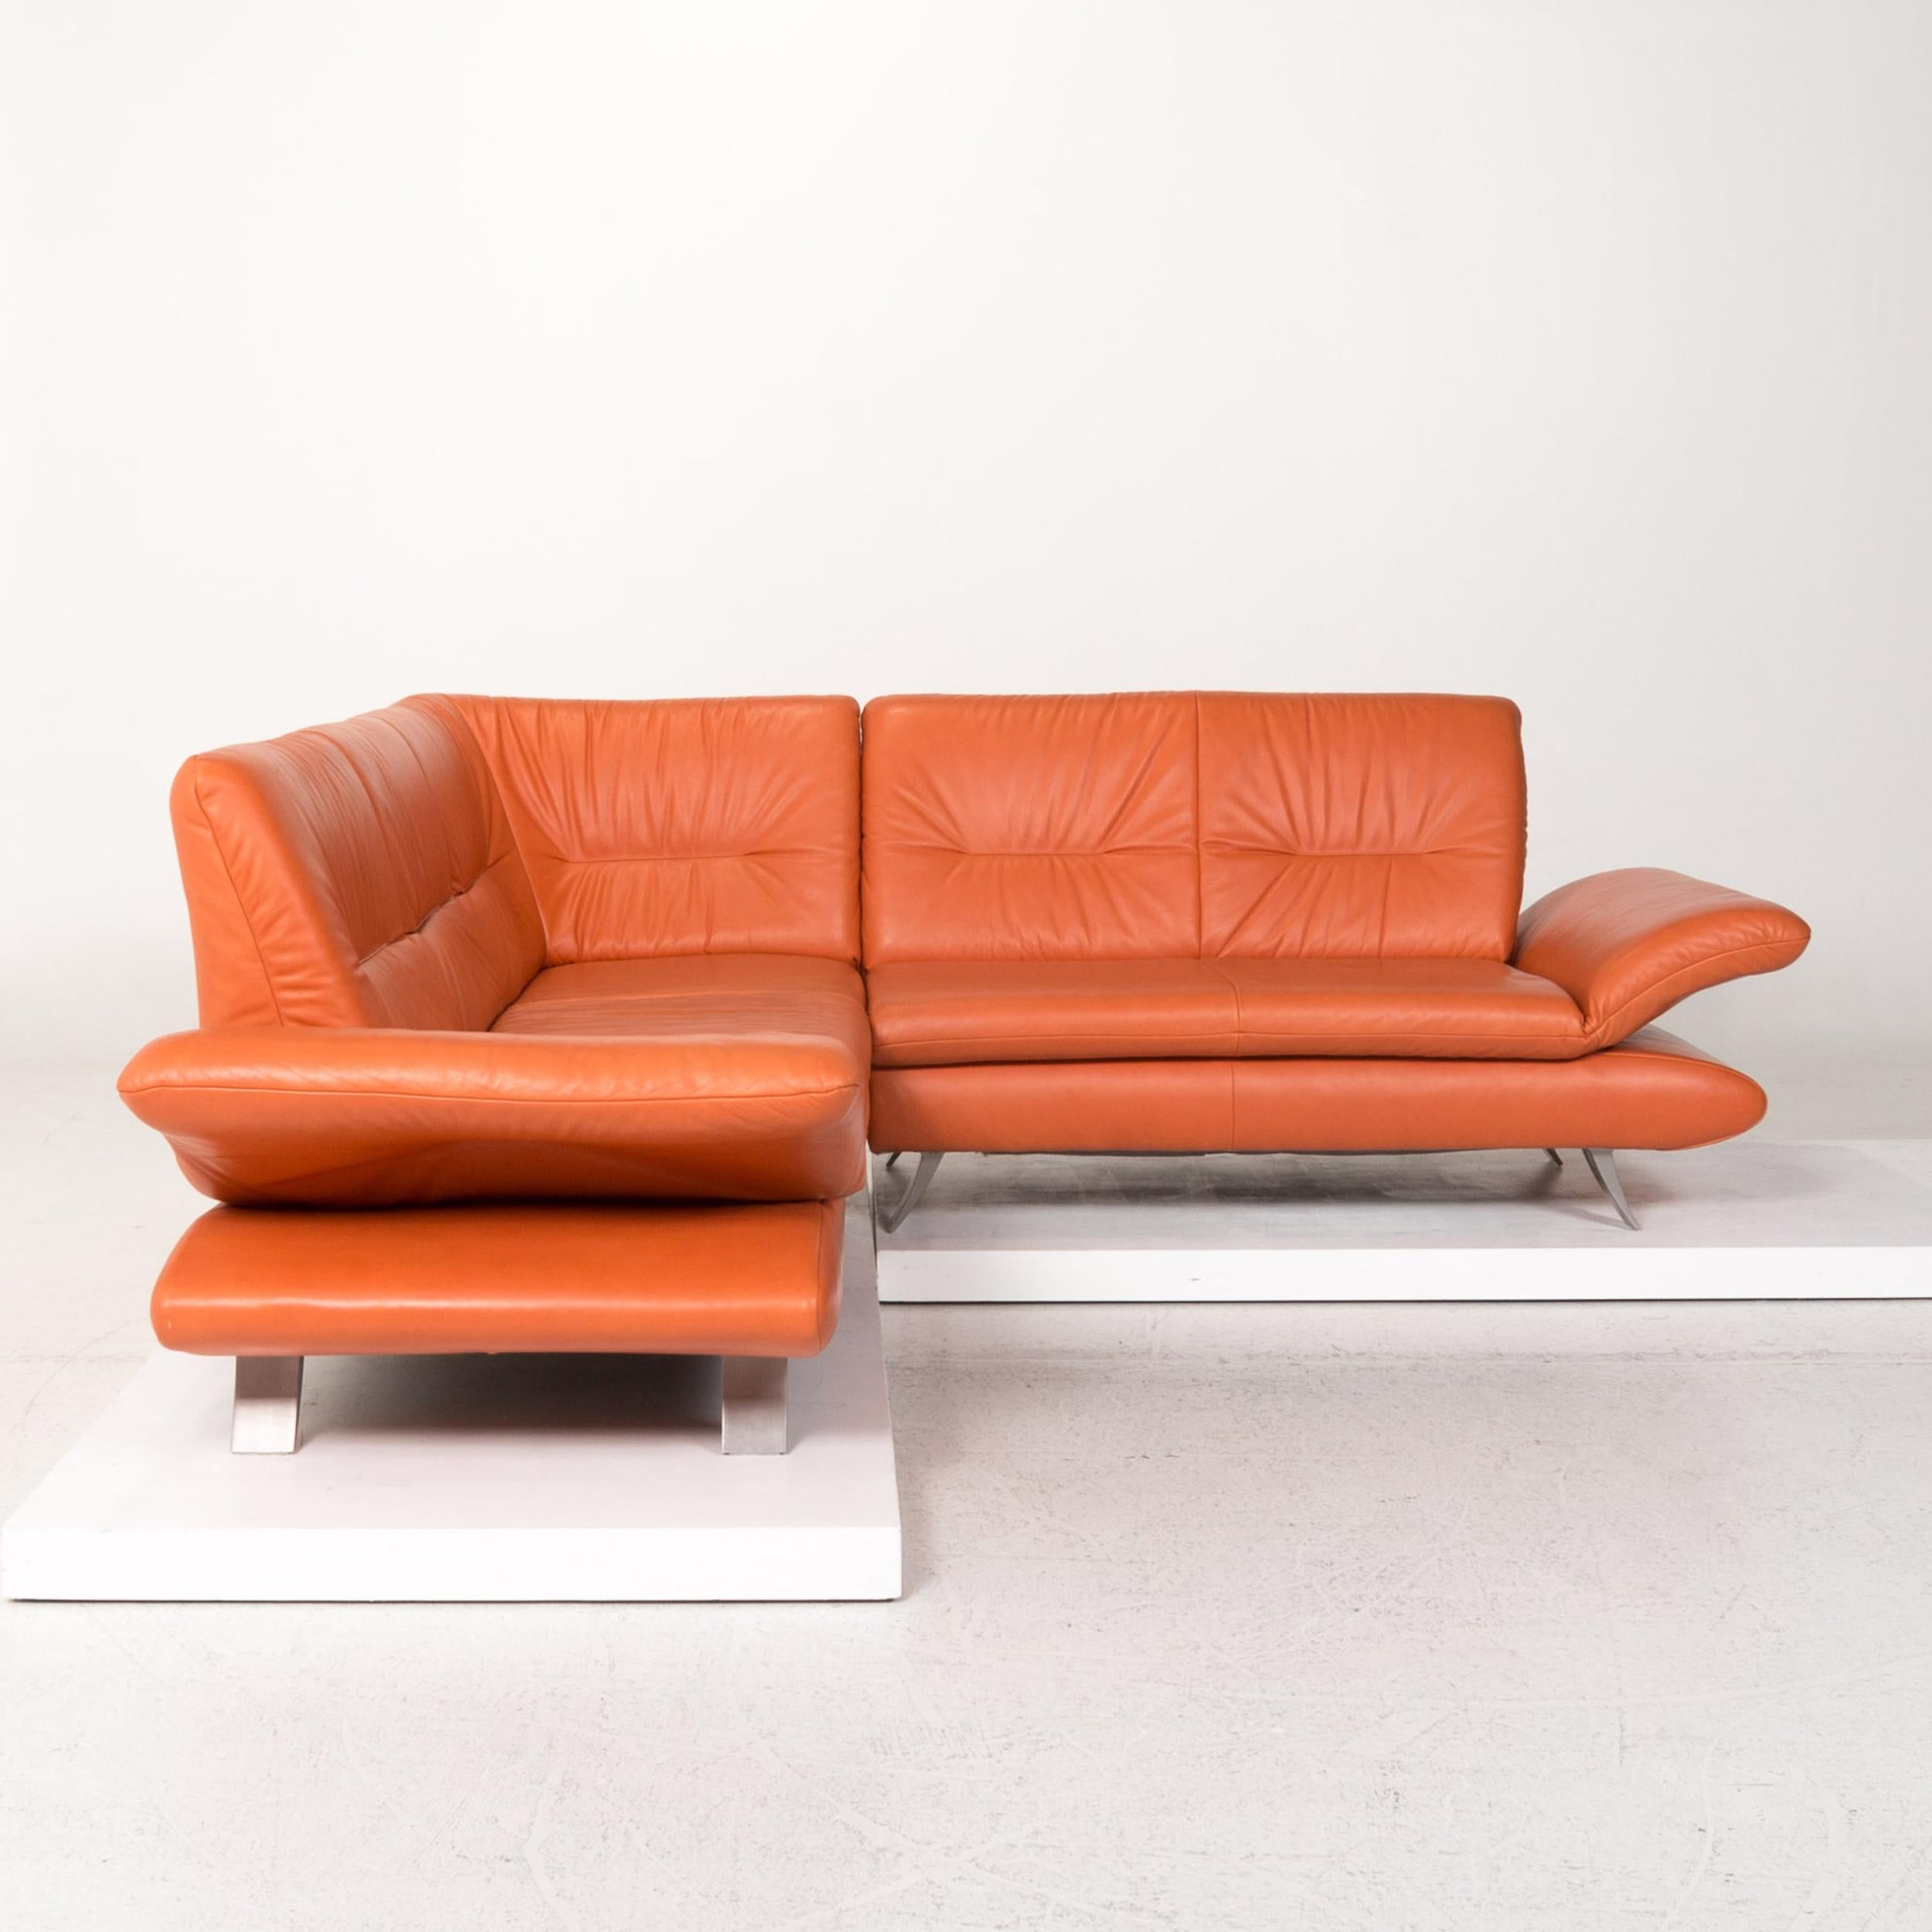 Koinor Rossini Leather Corner Sofa Terracotta Orange Sofa Function Couch 3